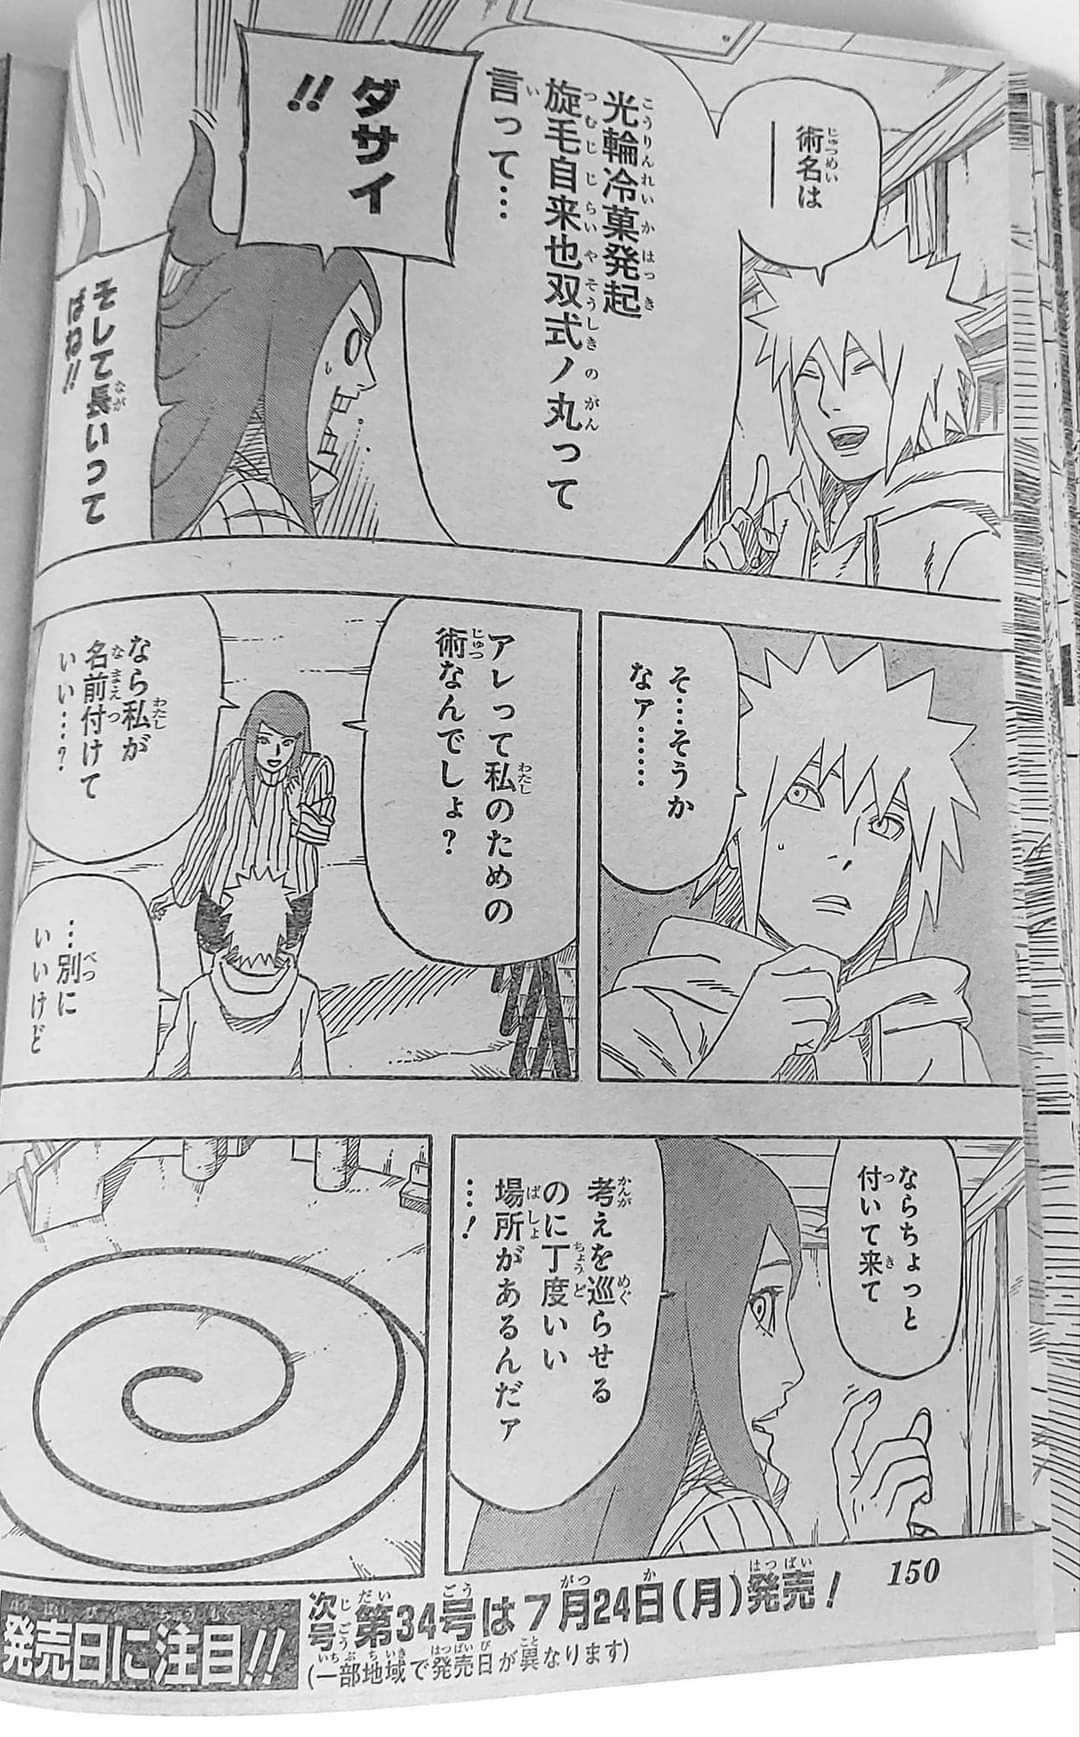 Naruto: mangá one-shot do Minato completo para ler online (spoilers) F012mZ9WAAEzApF?format=jpg&name=large